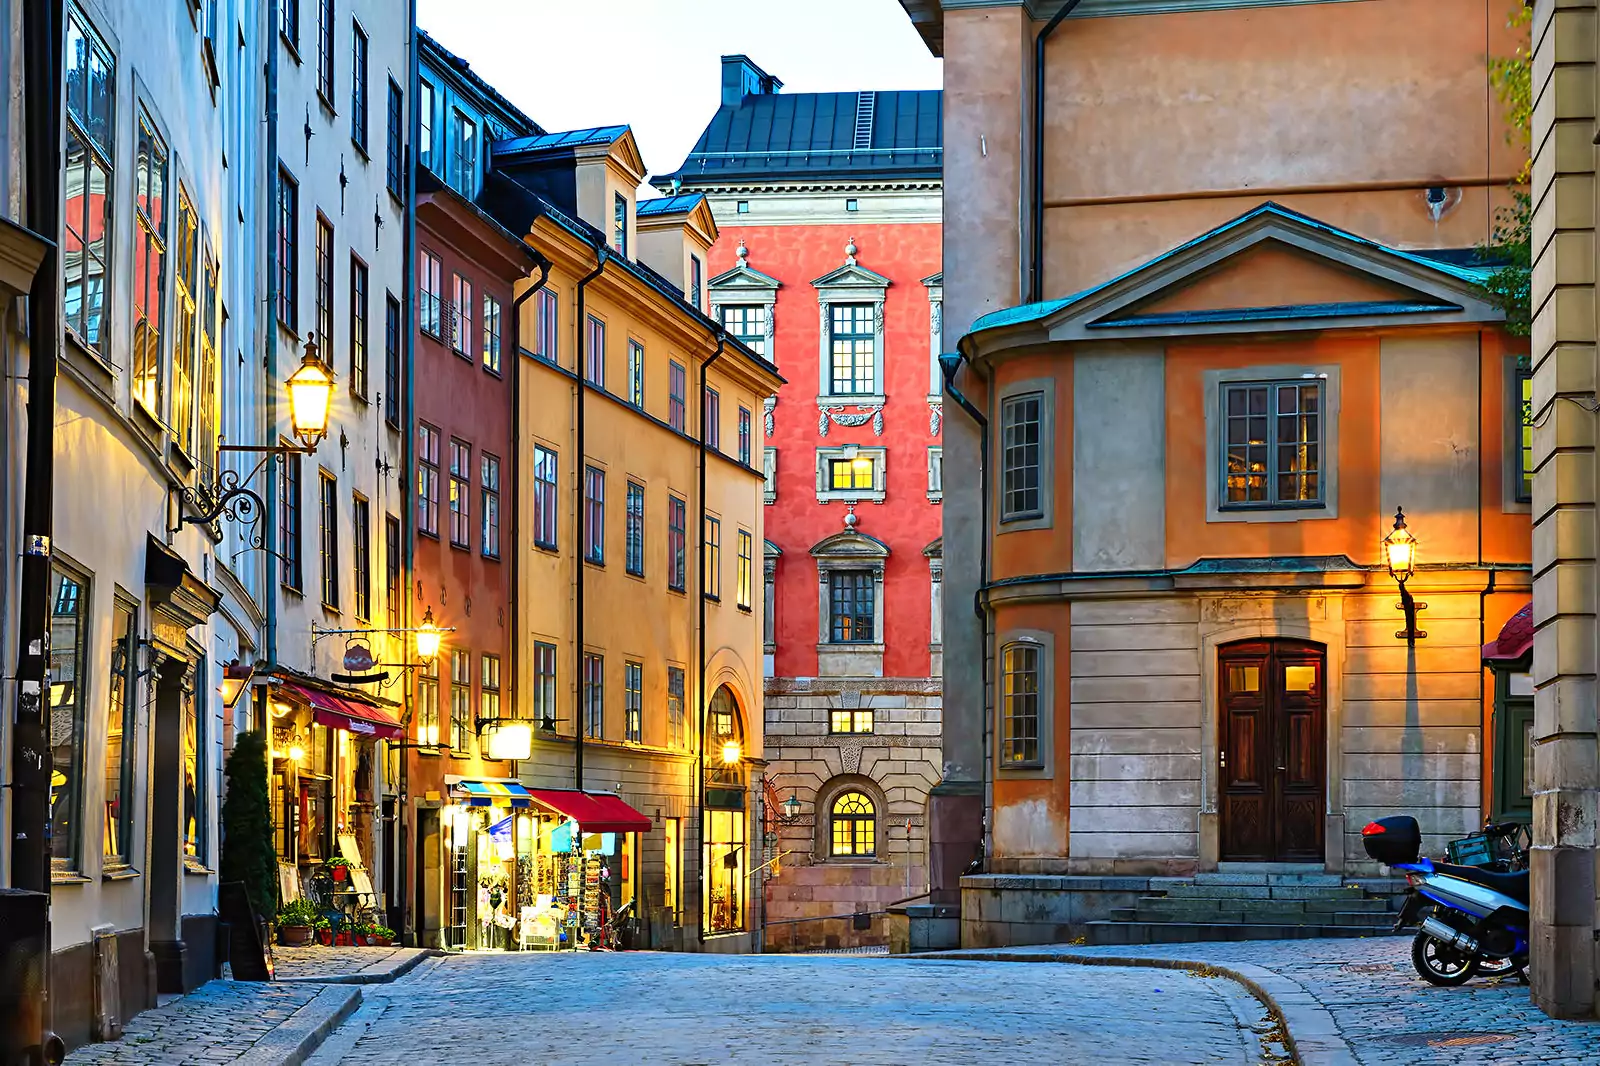 Stockholm's Gamla Stan